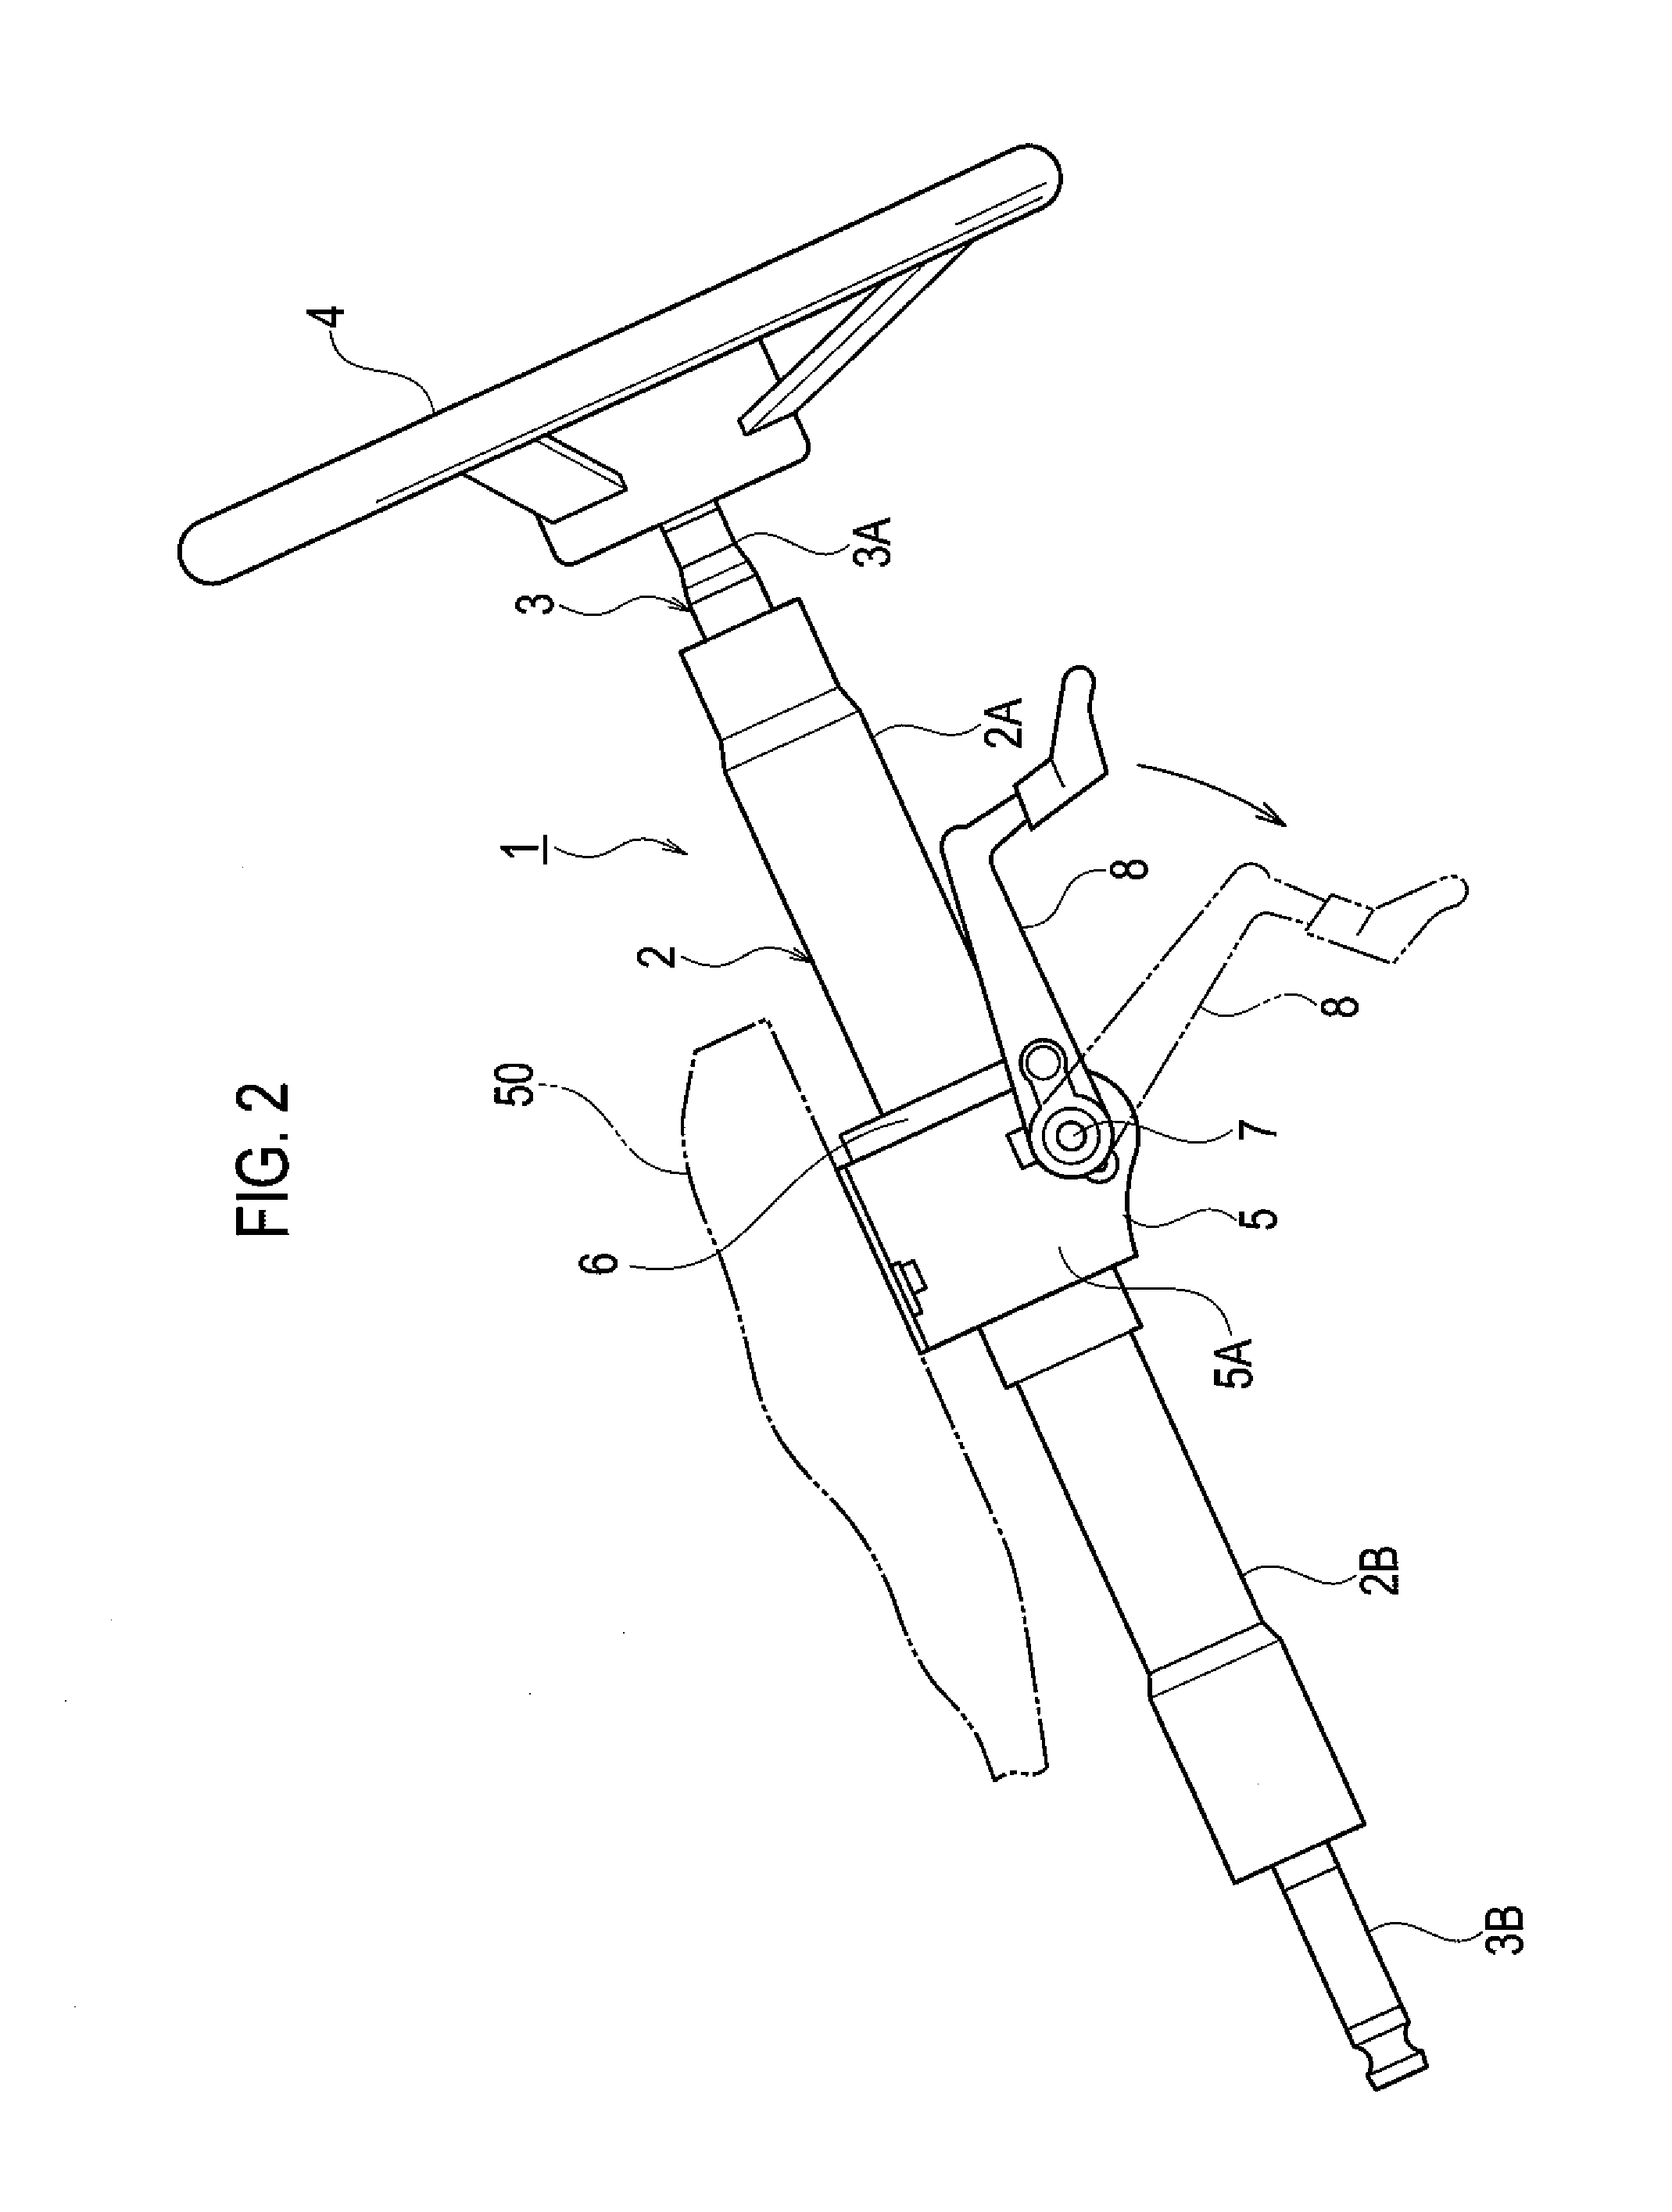 Steering column device